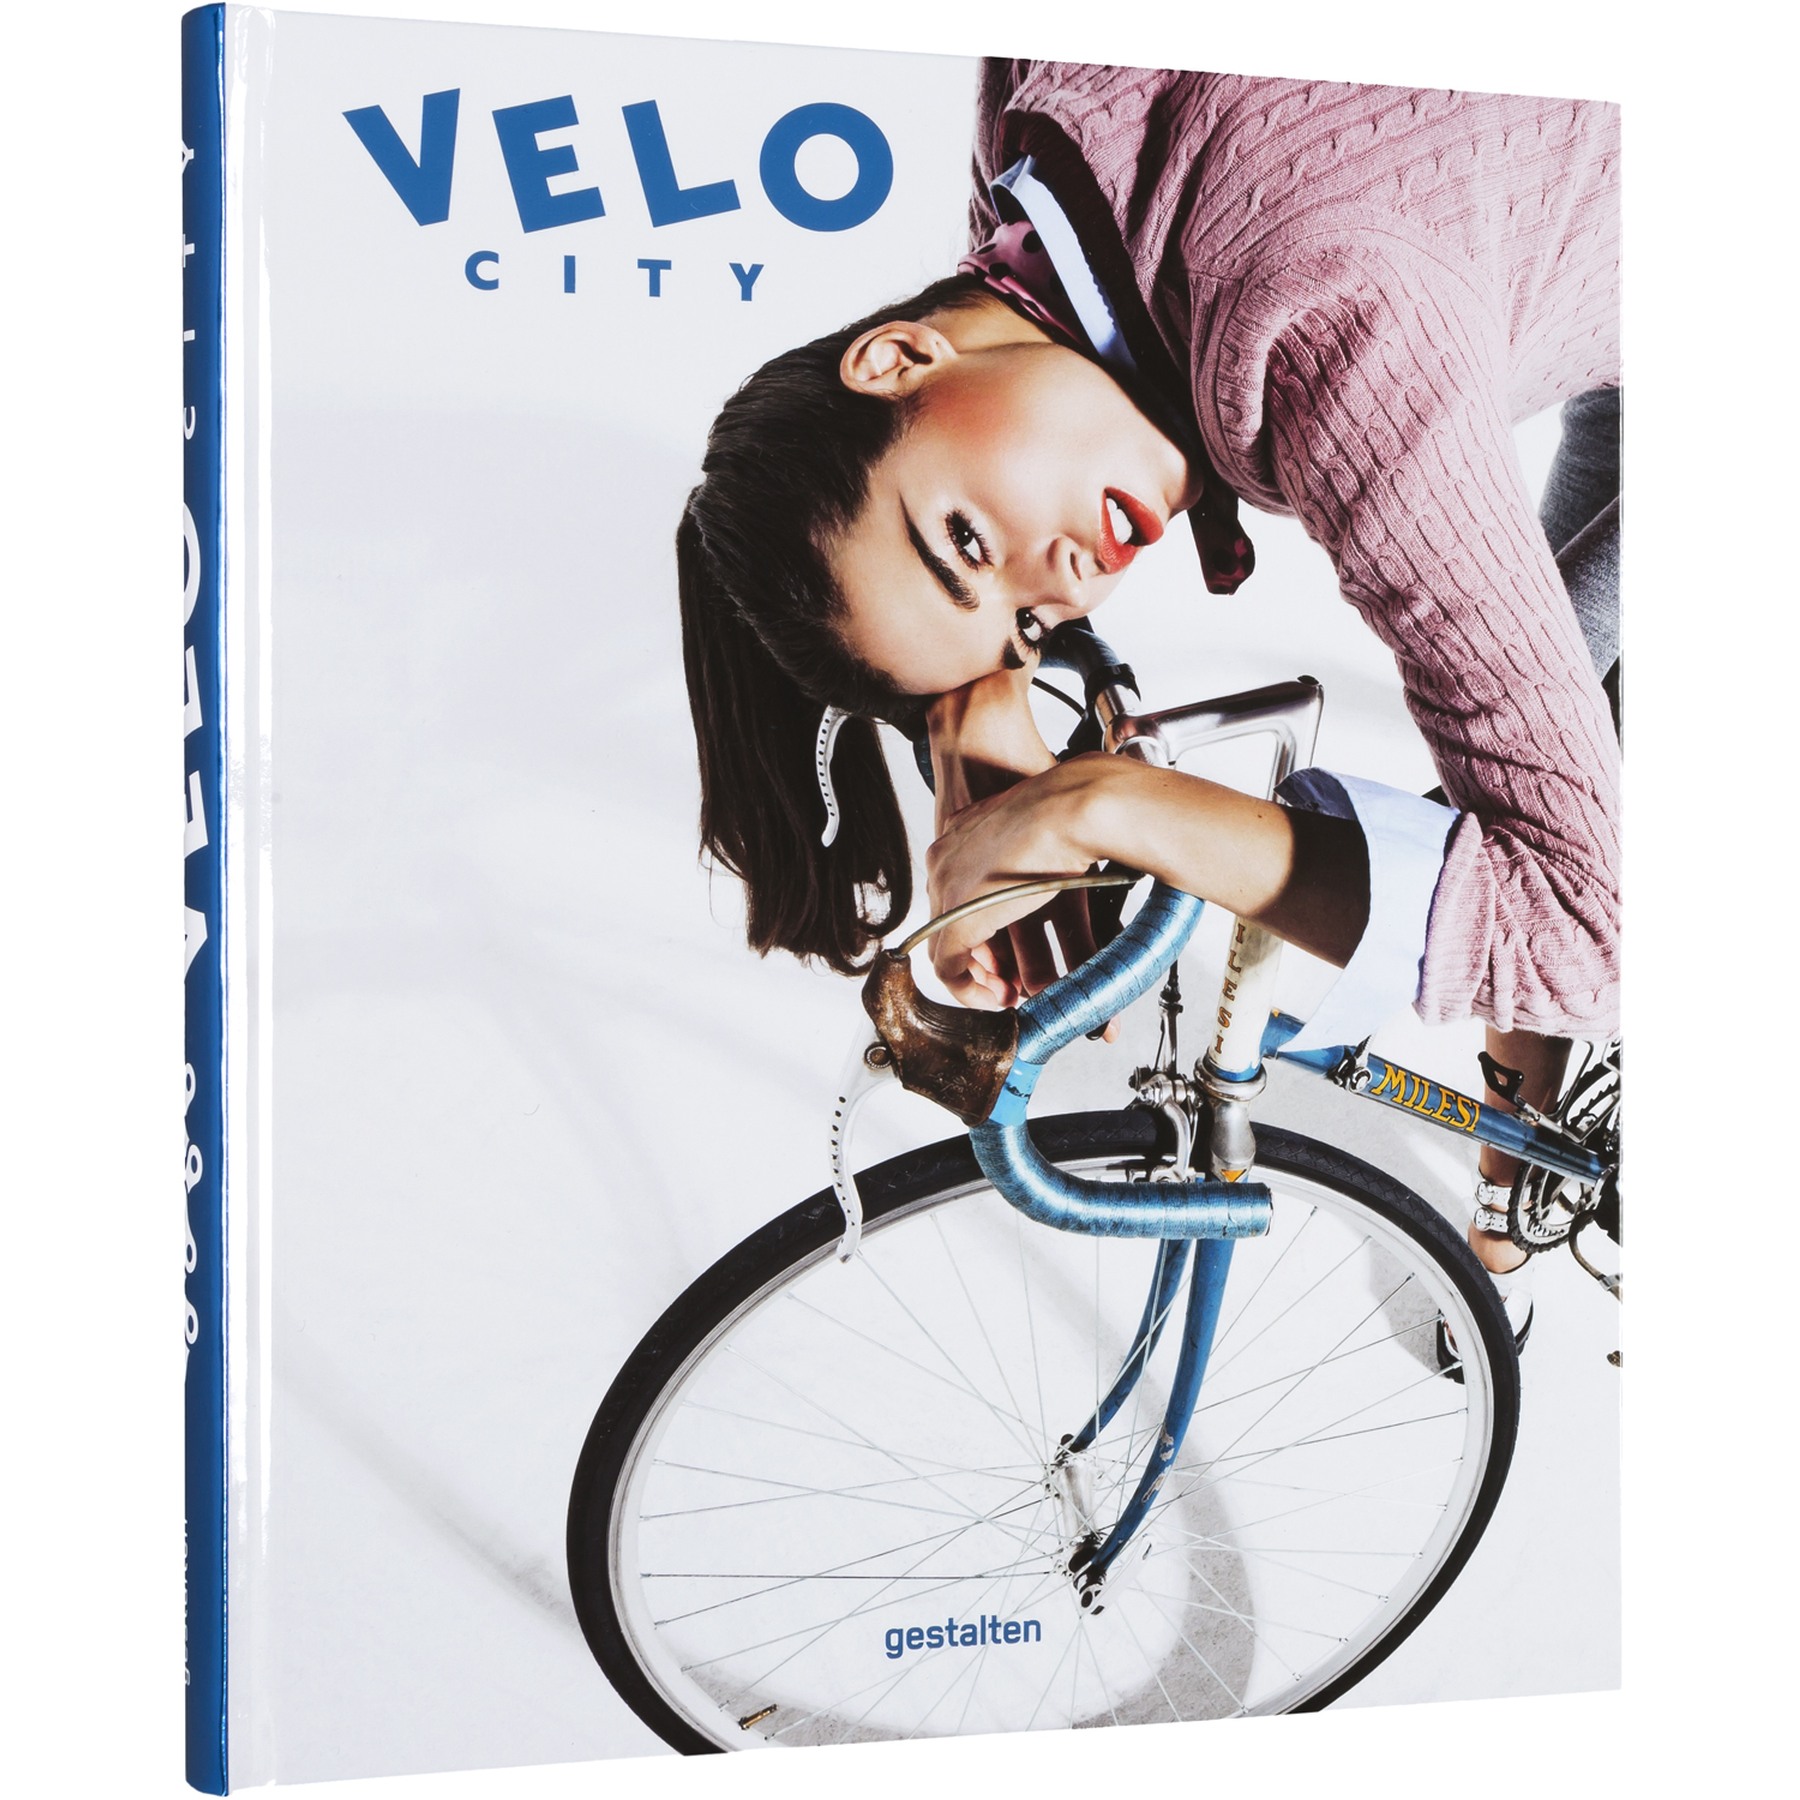 Productfoto van gestalten VELO City - English - Bicycle Culture and City Life